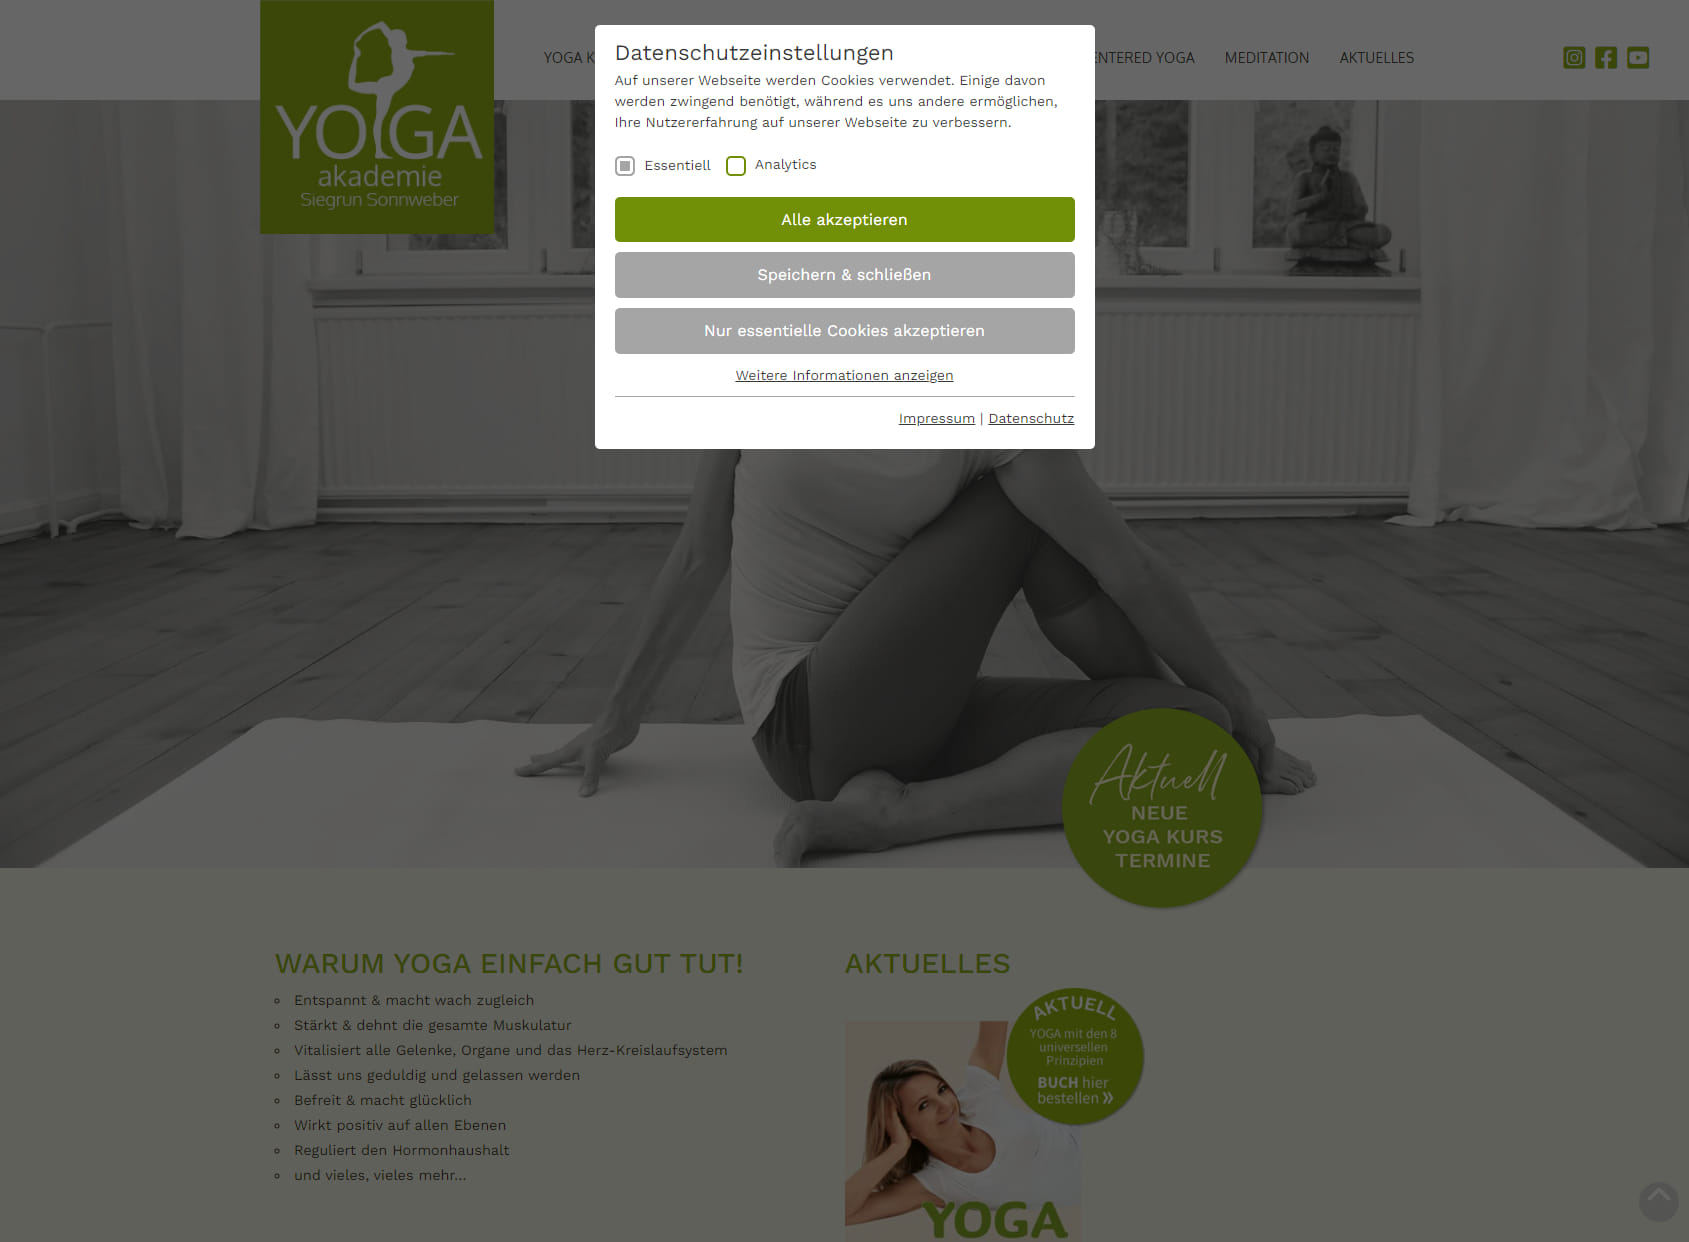 yoga academy Siegrun Sonnweber